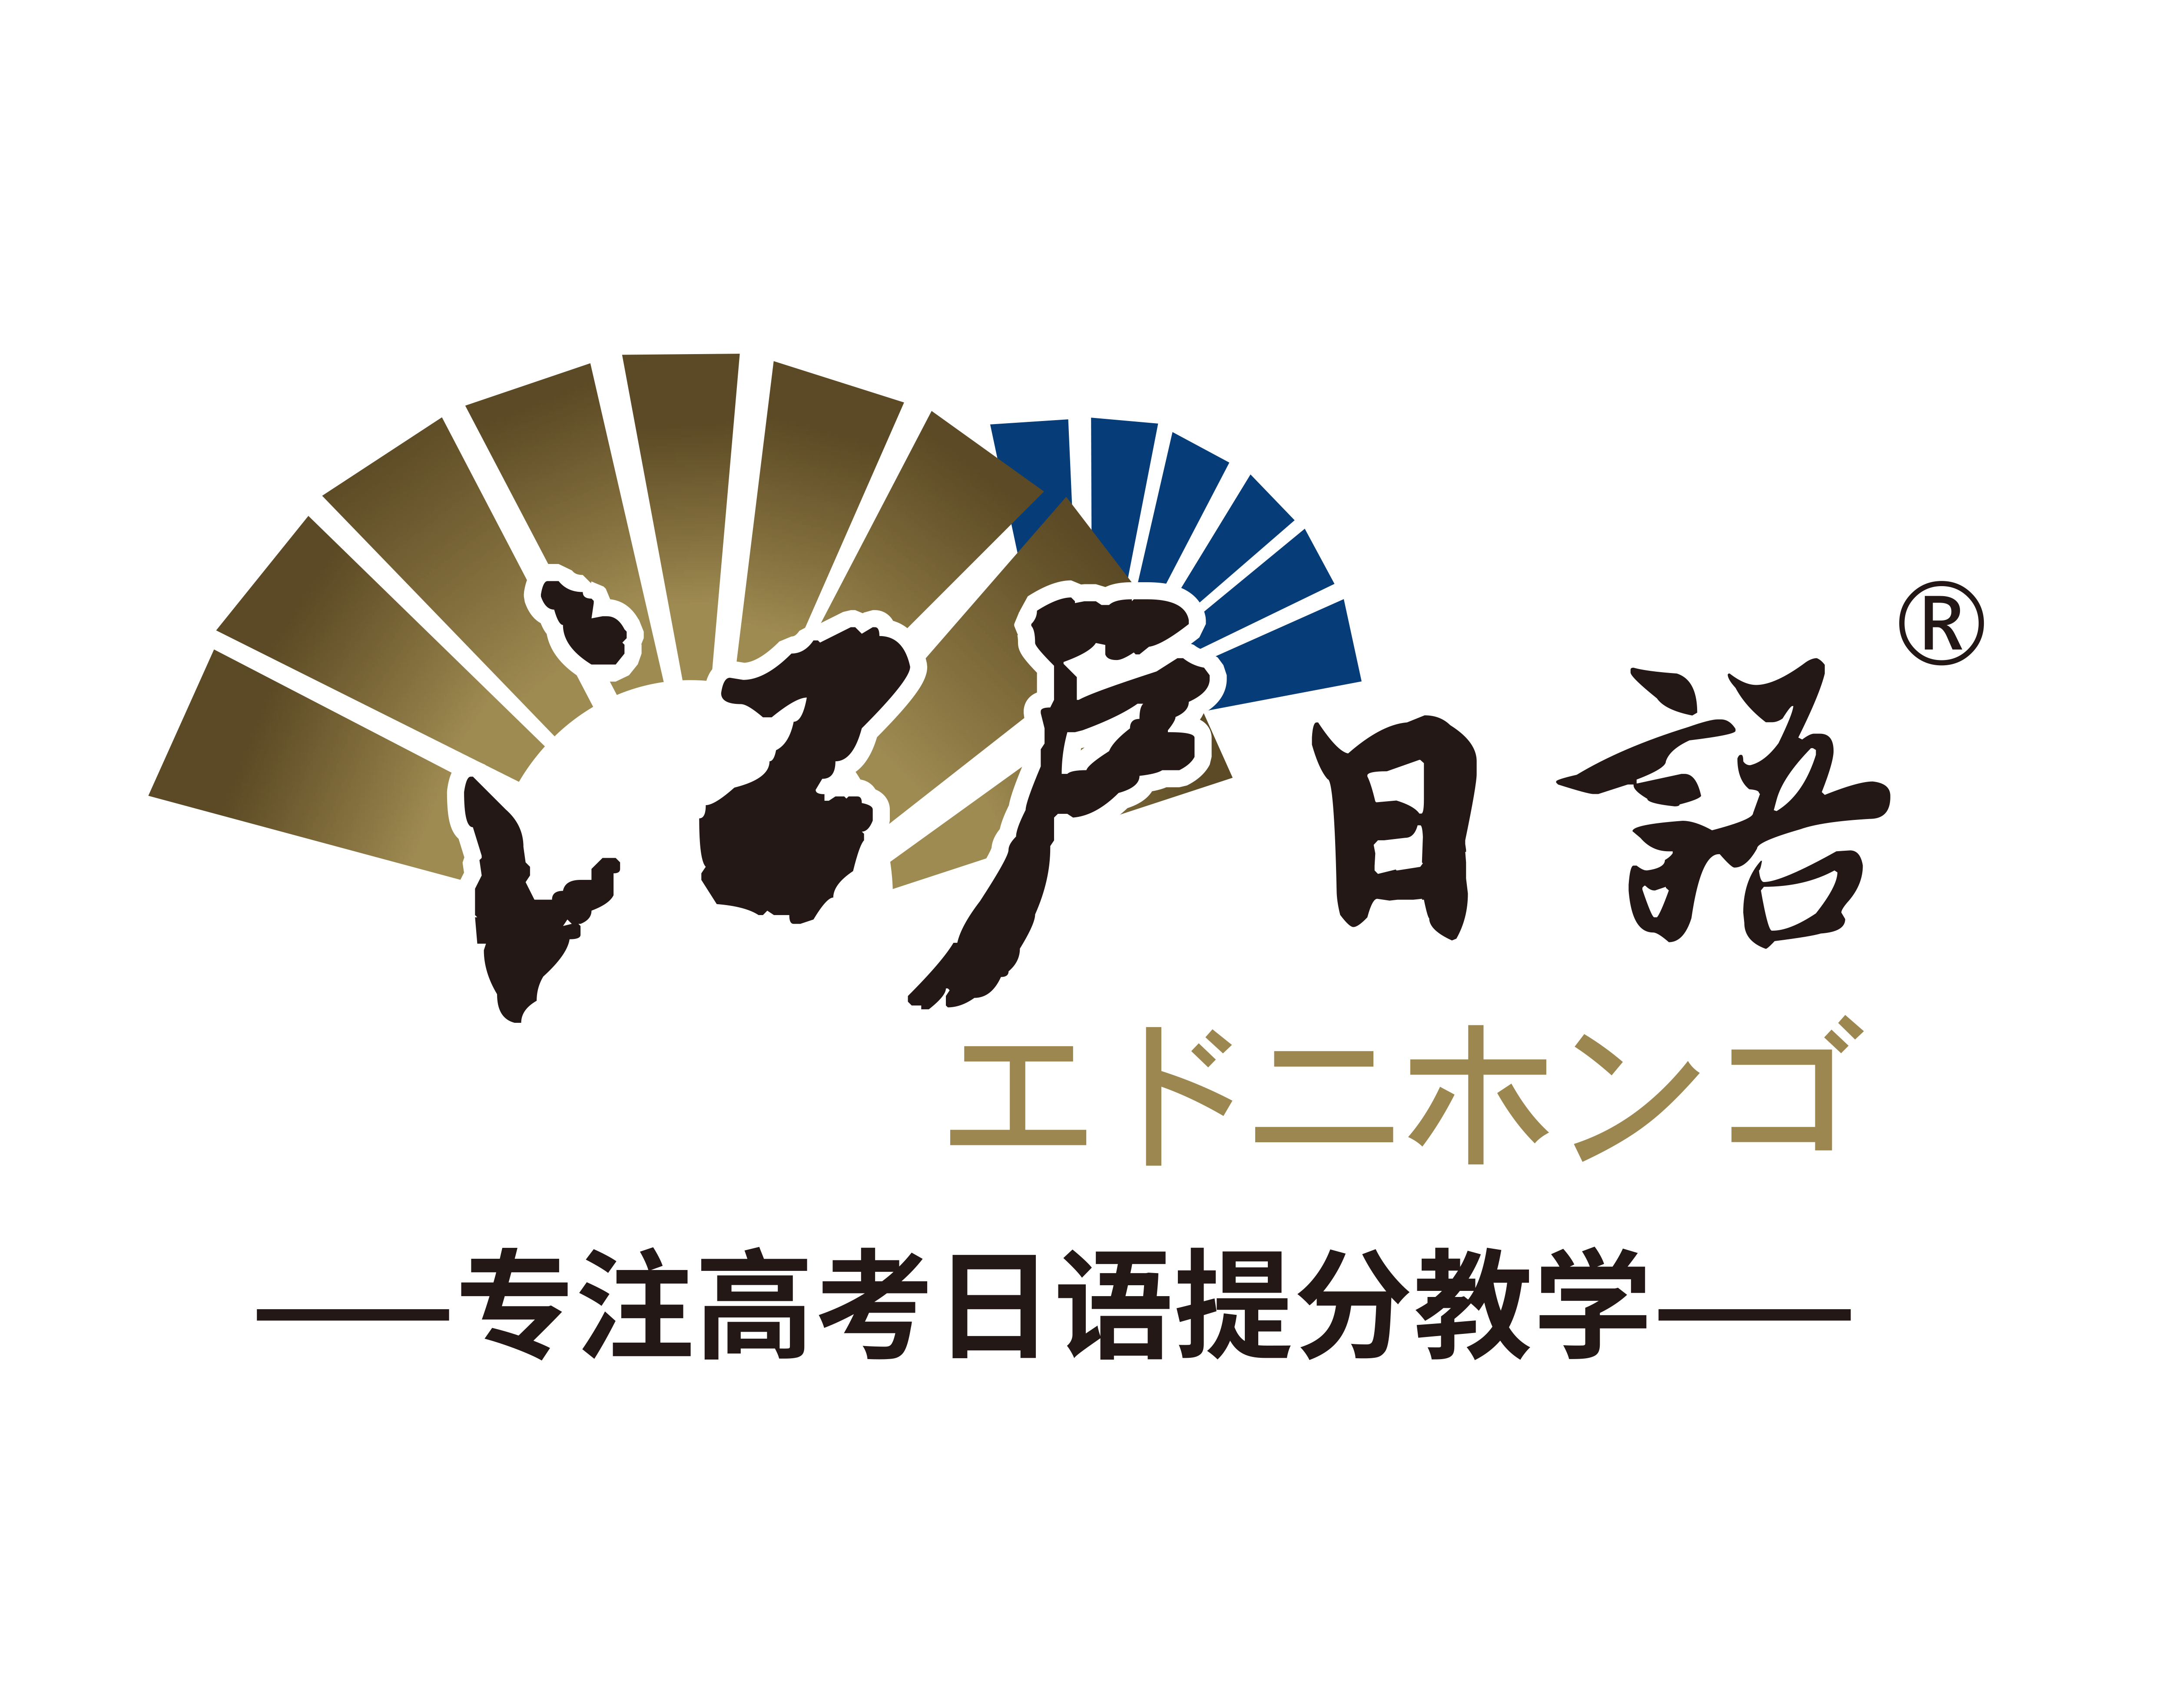 江户日语logo源文件带R-3.png